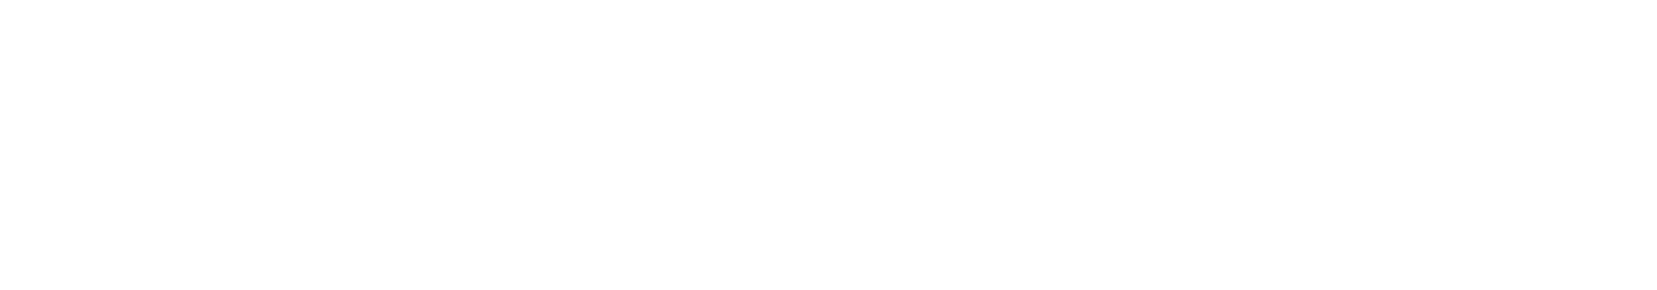 Sartorius logo grand pour les fonds sombres (PNG transparent)